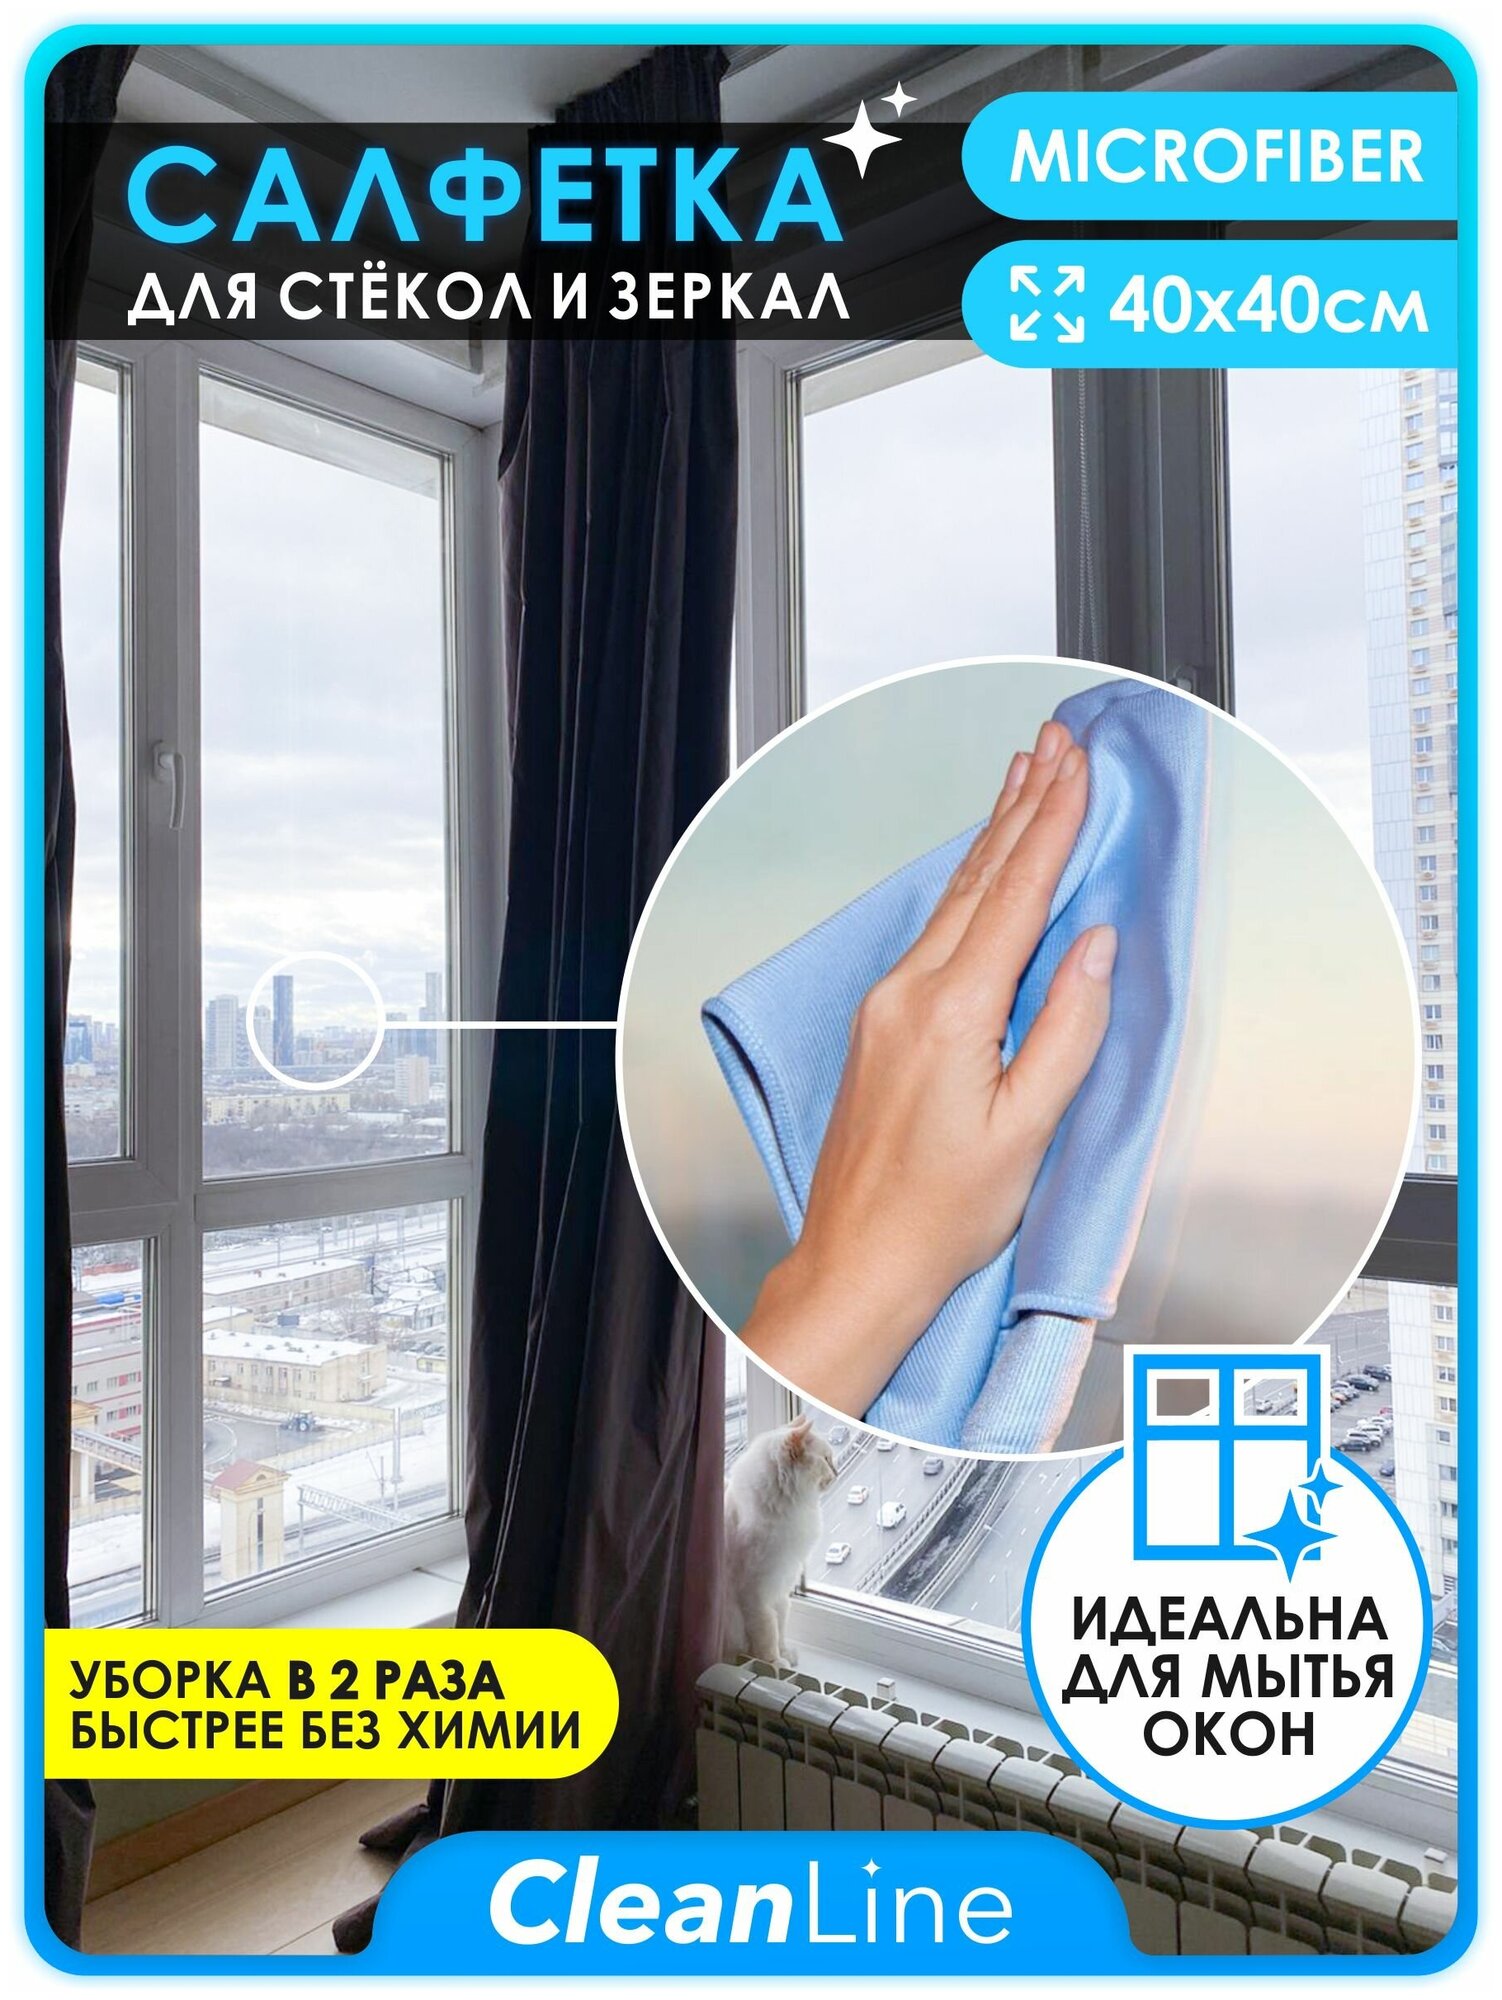 CleanLine Салфетка из микрофибры тряпка для стекол и зеркал тряпочка для мытья окон салфетка для авто 40*40 см 1 шт.